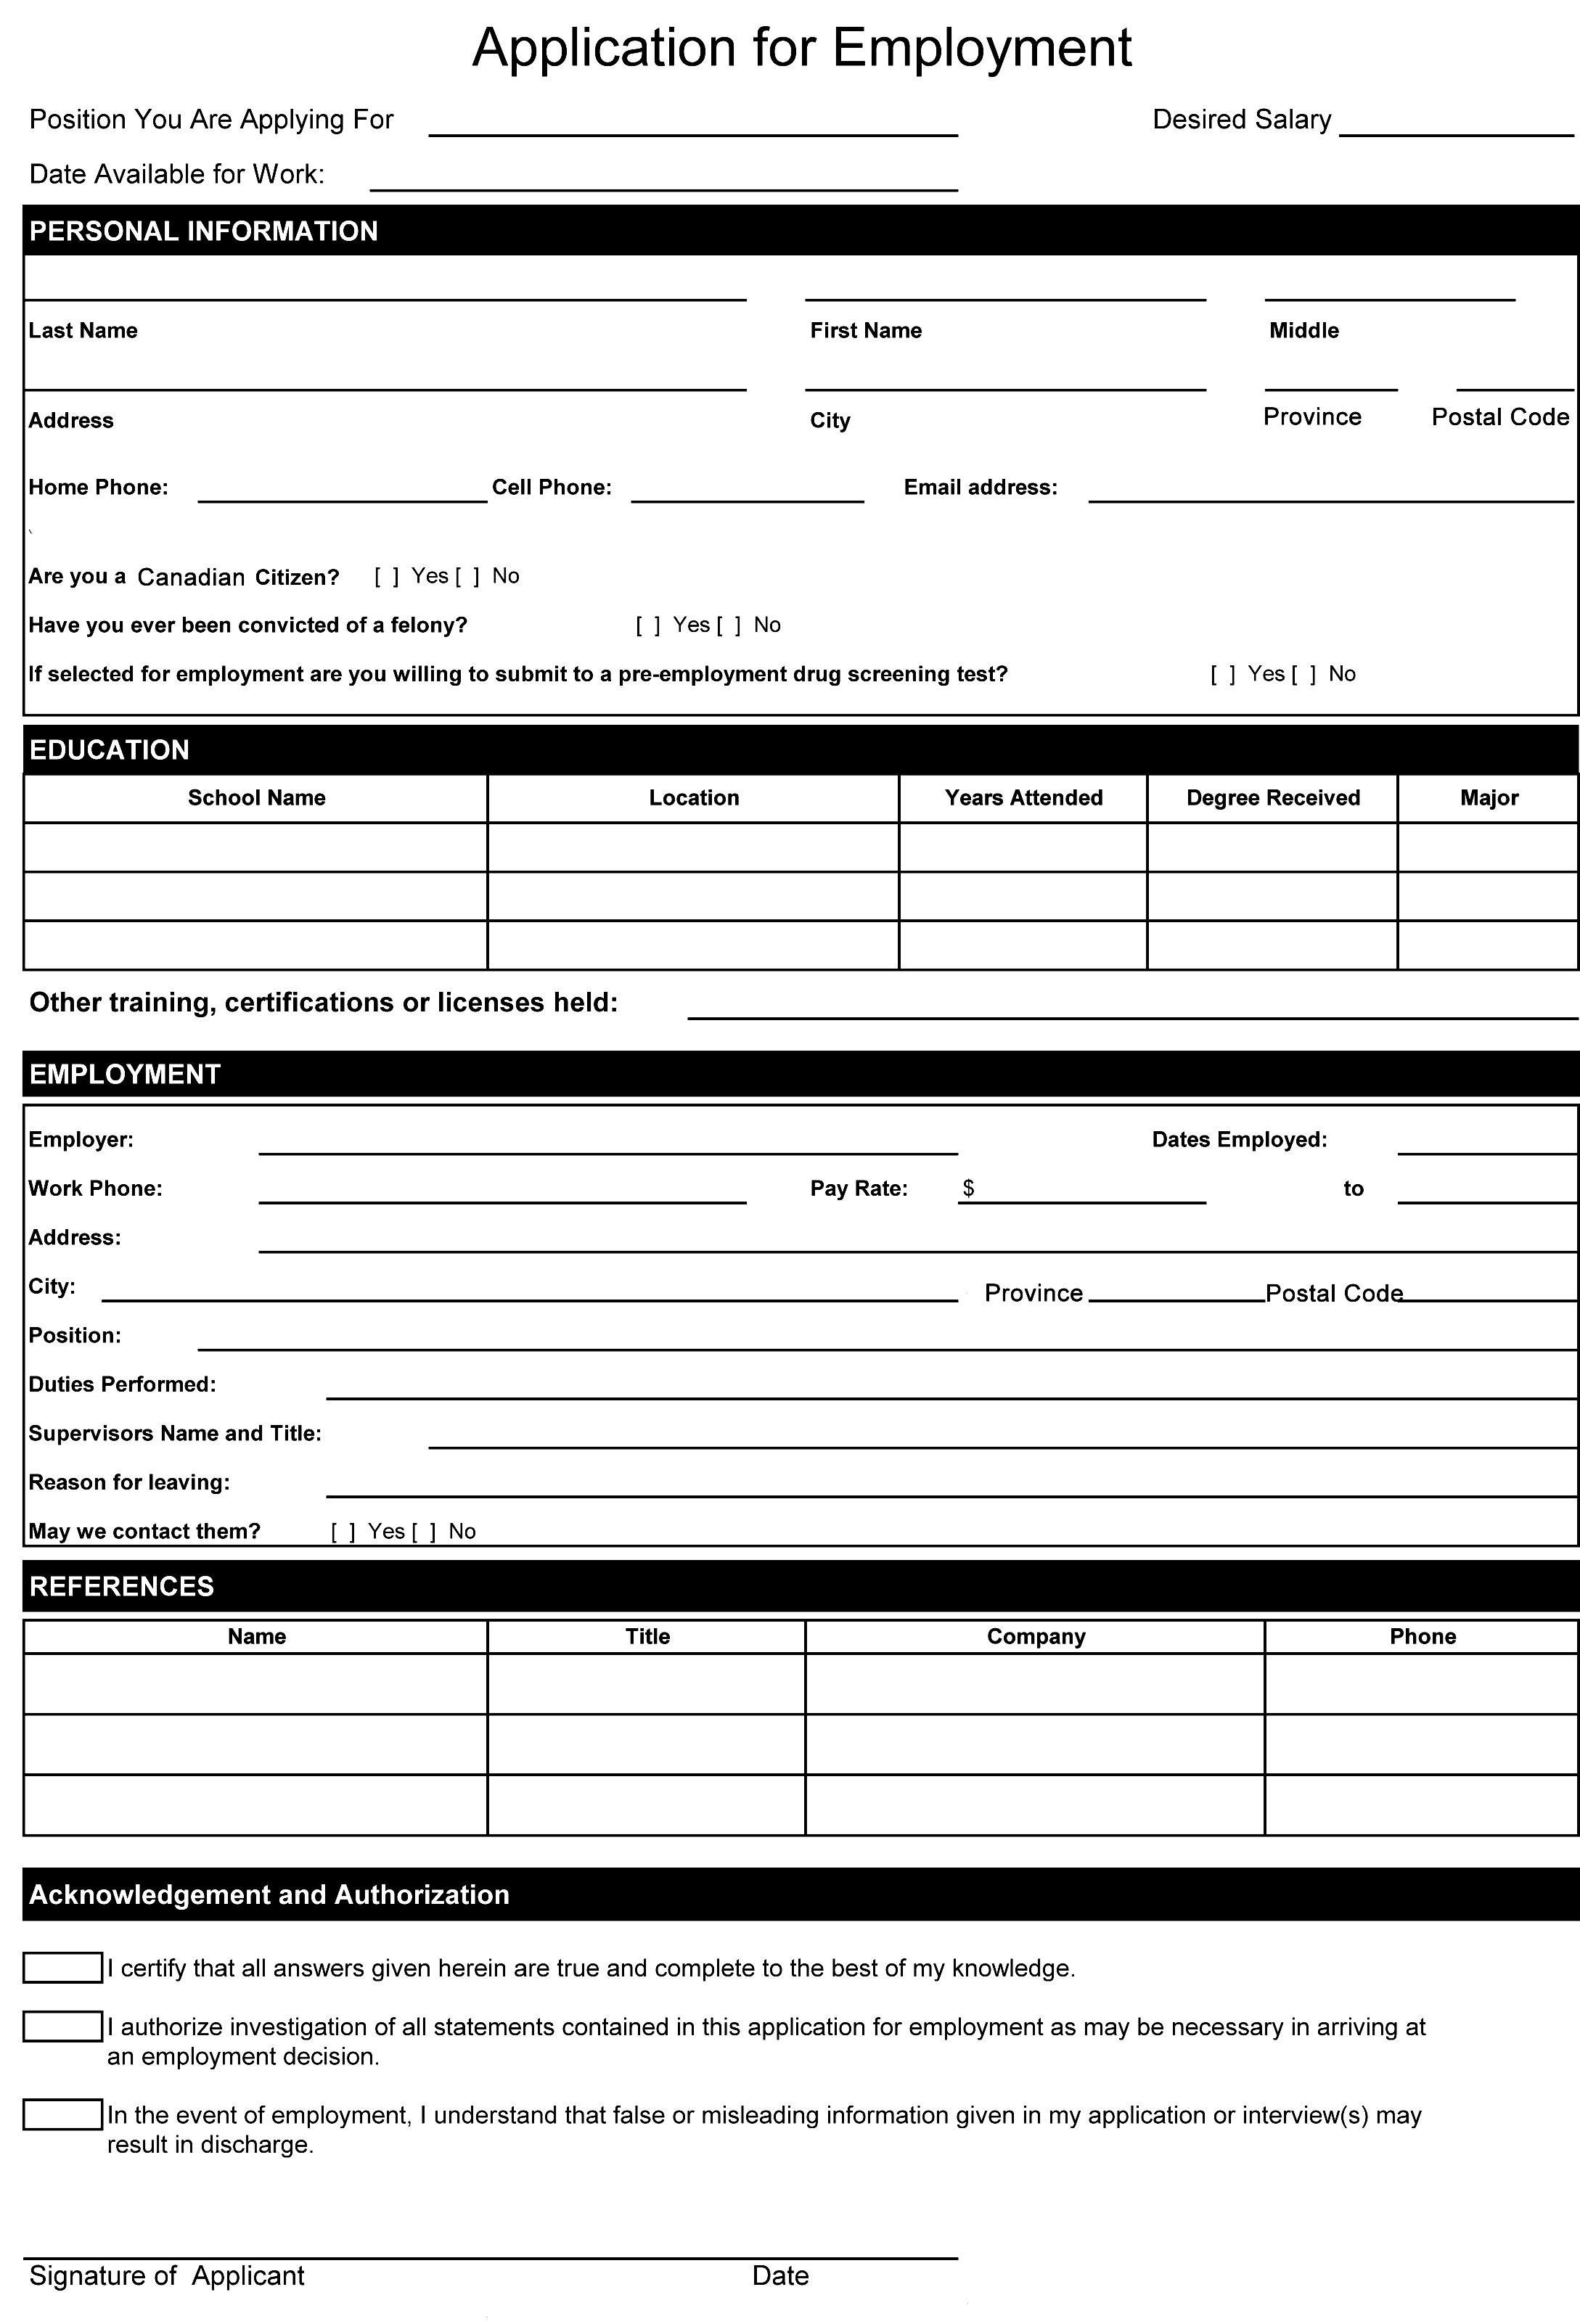 Resume Format Word Document | Resume Format | Job Application Form - Free Printable Job Application